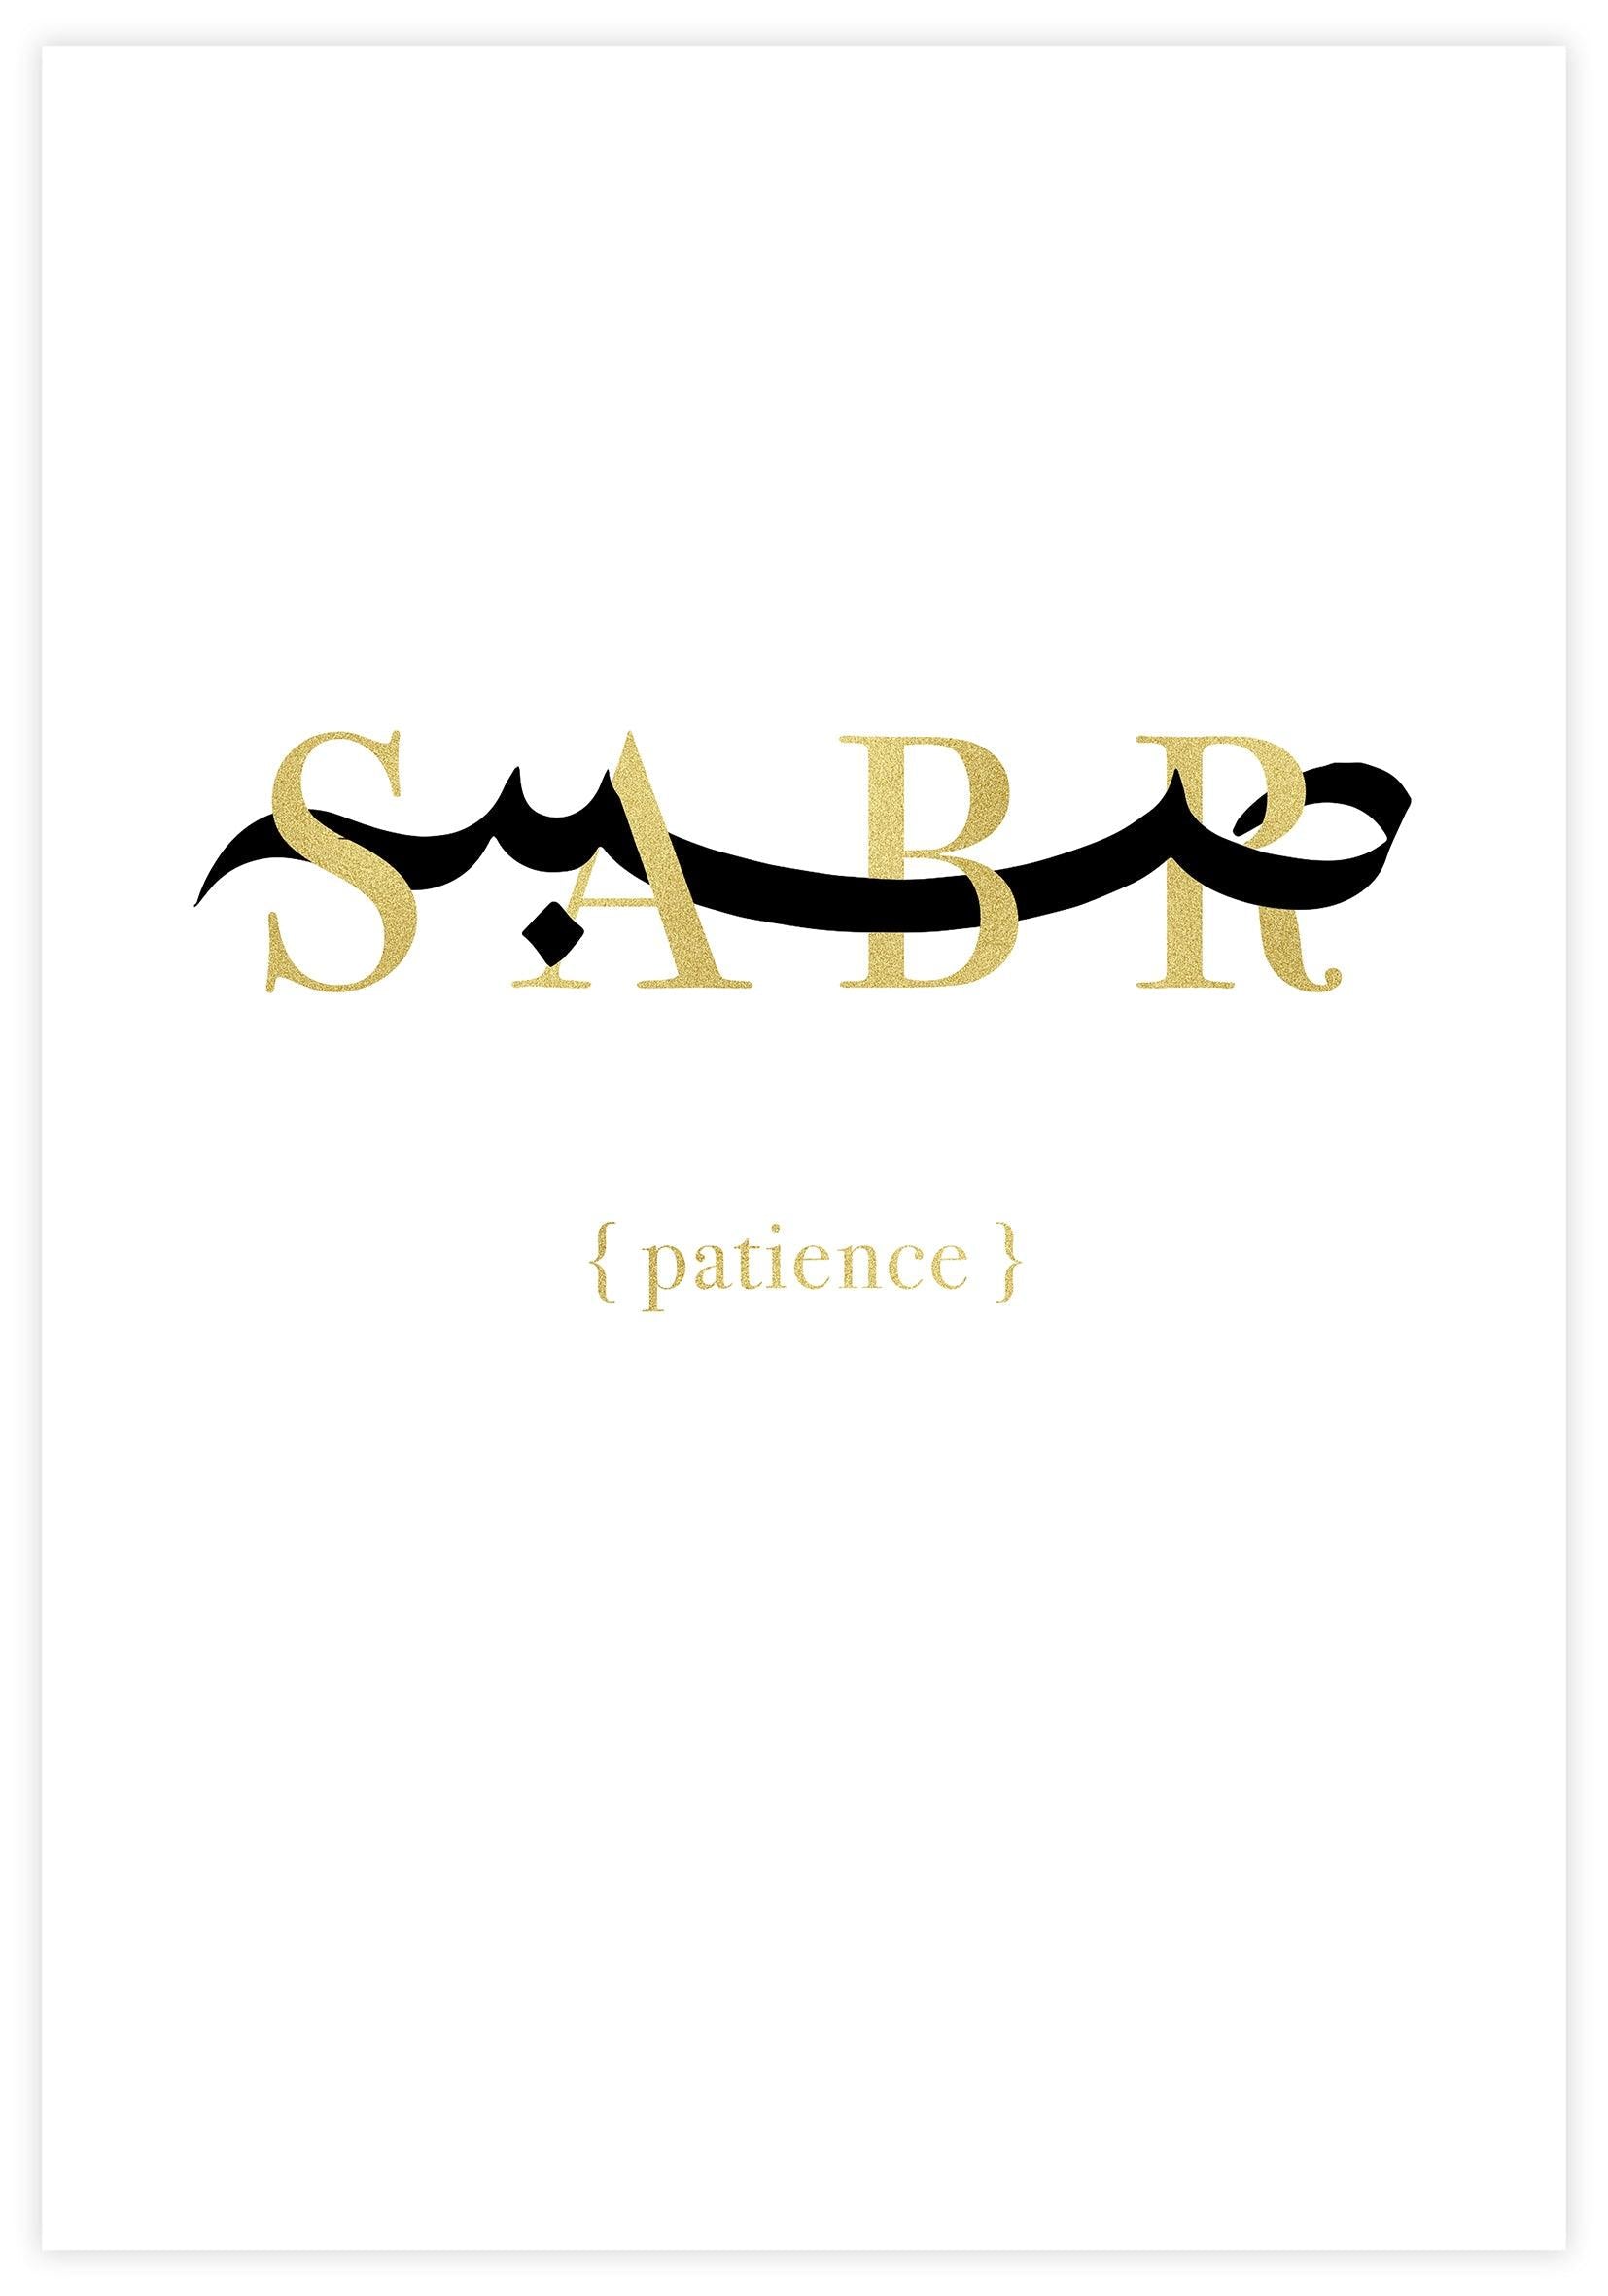 Sabr Patience Gold Poster - KAMAN